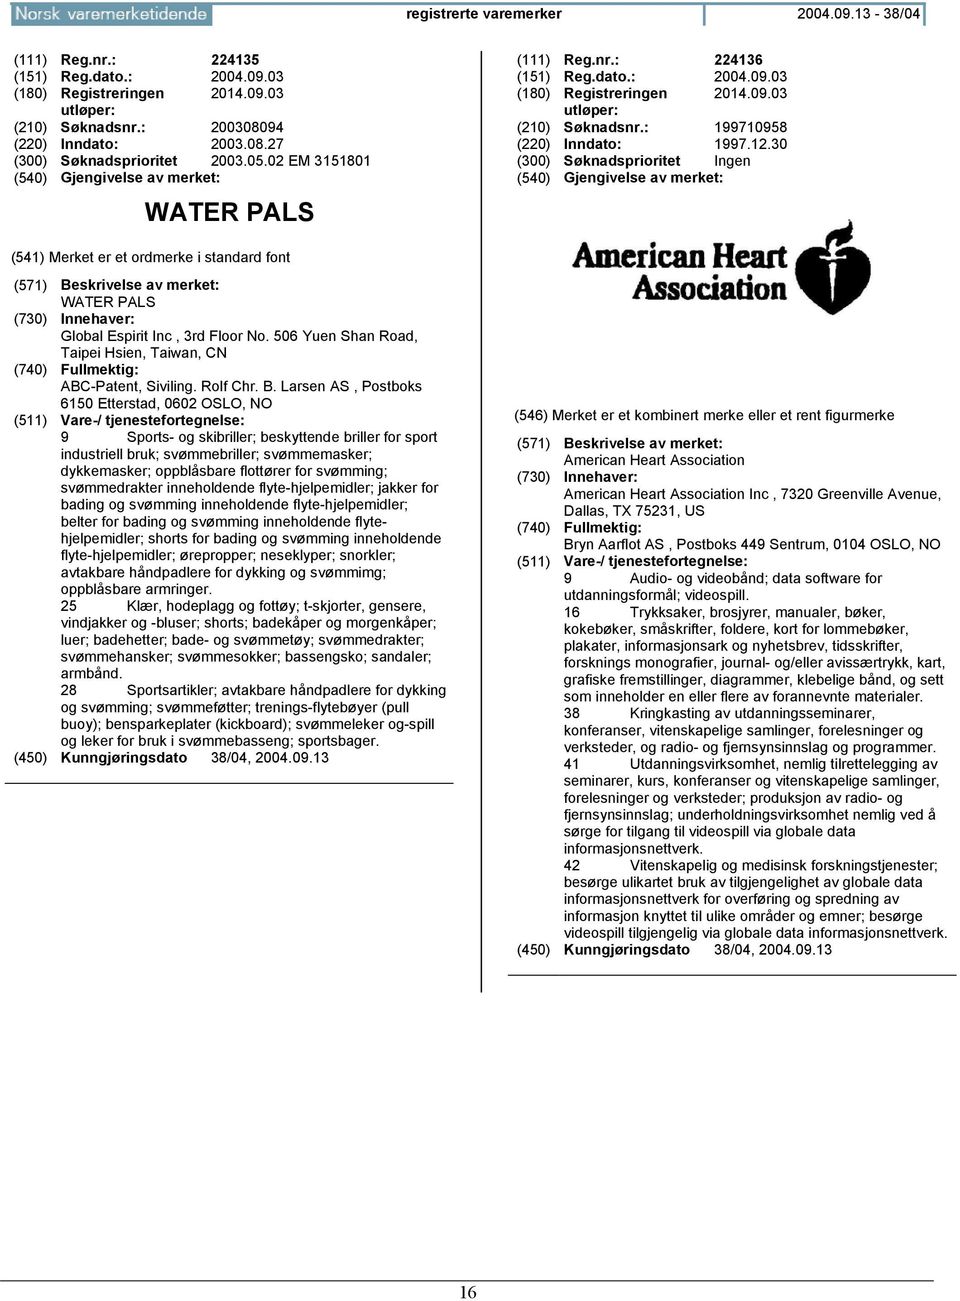 30 WATER PALS Global Espirit Inc, 3rd Floor No. 506 Yuen Shan Road, Taipei Hsien, Taiwan, CN ABC-Patent, Siviling. Rolf Chr. B.